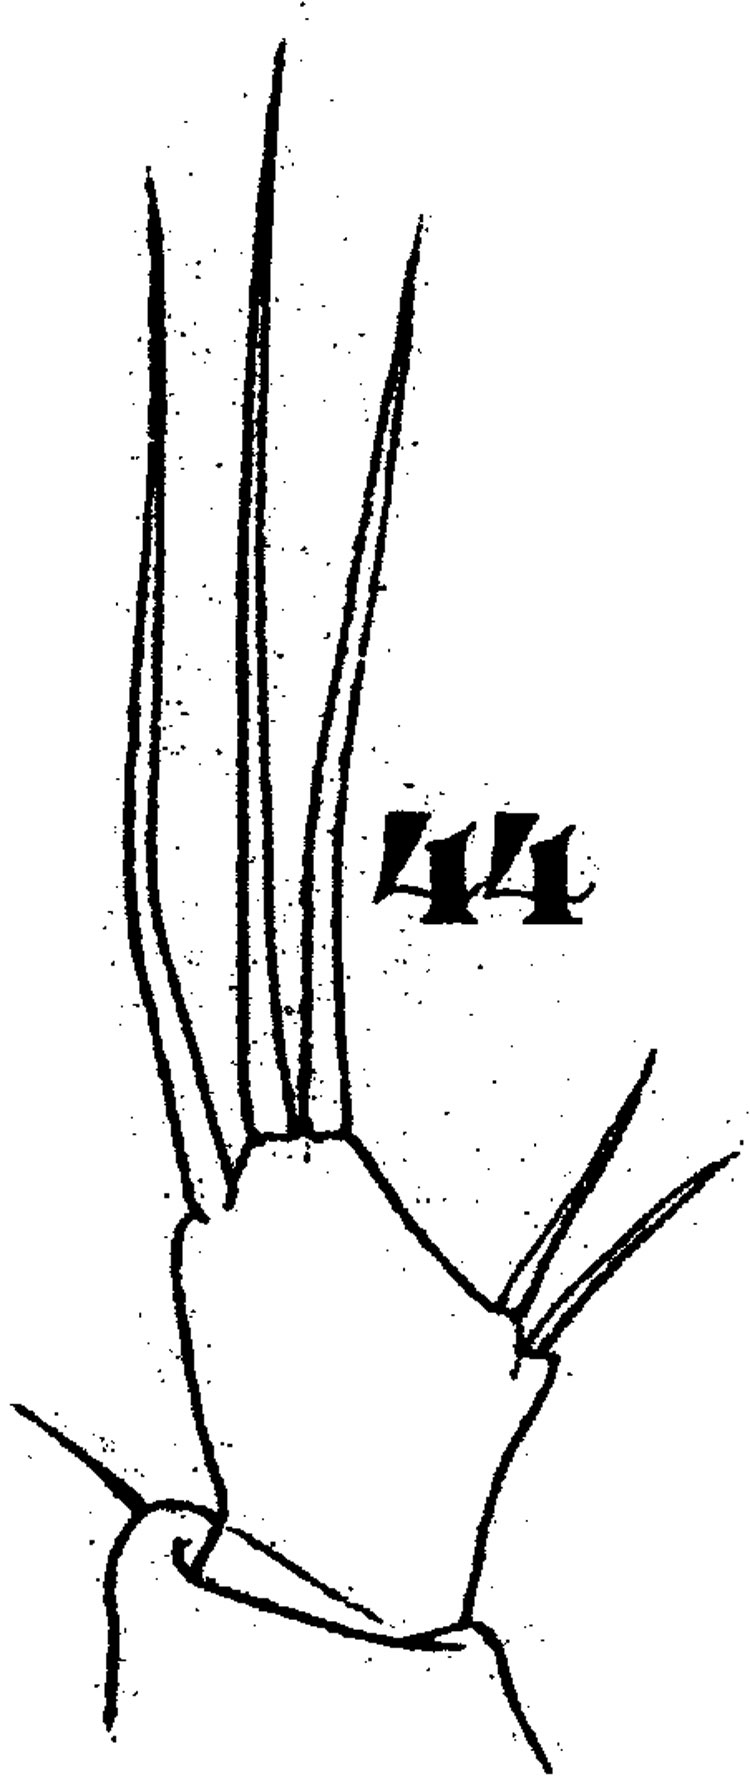 Species Ratania flava - Plate 6 of morphological figures